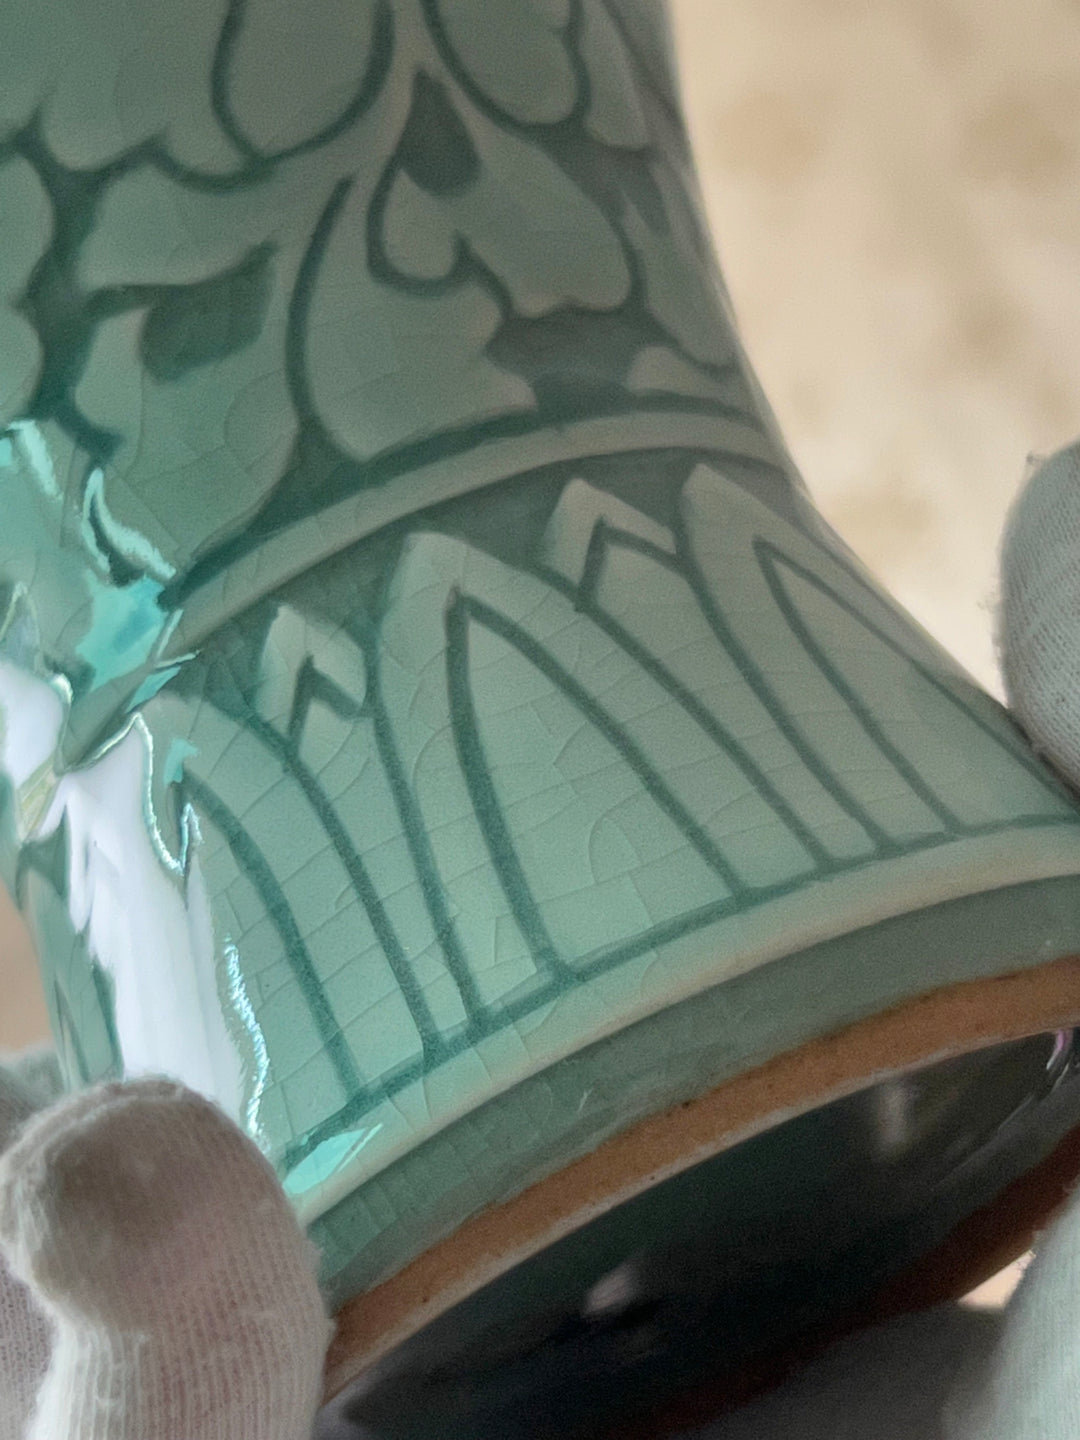 Celadon Vase Set with Inlaid Vine Pattern (청자 상감 당초문 매병, 주병)